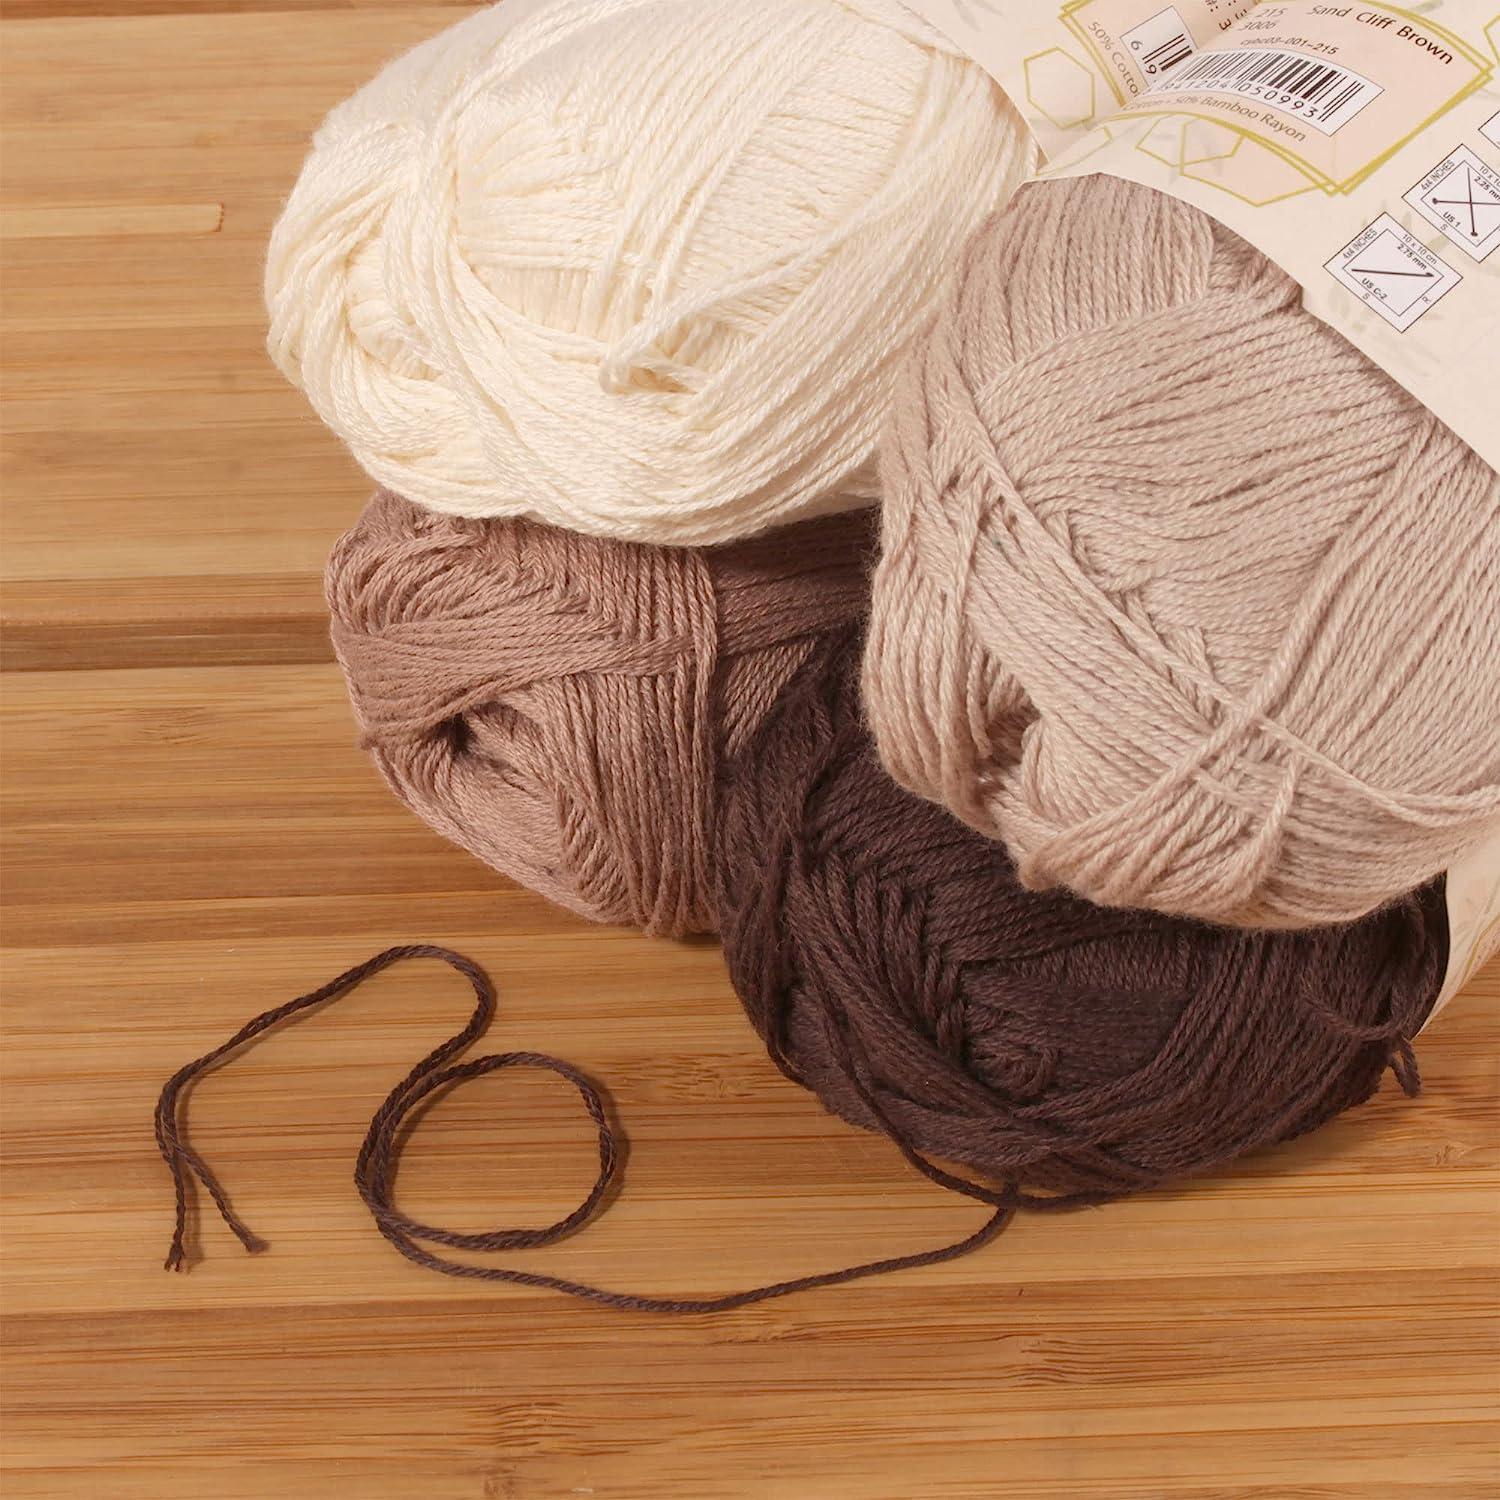  JubileeYarn Soft and Slim Yarn - Baby Weight Bamboo Wool Blend  - 50g/Skein - 9913 Apricot - 2 Skeins